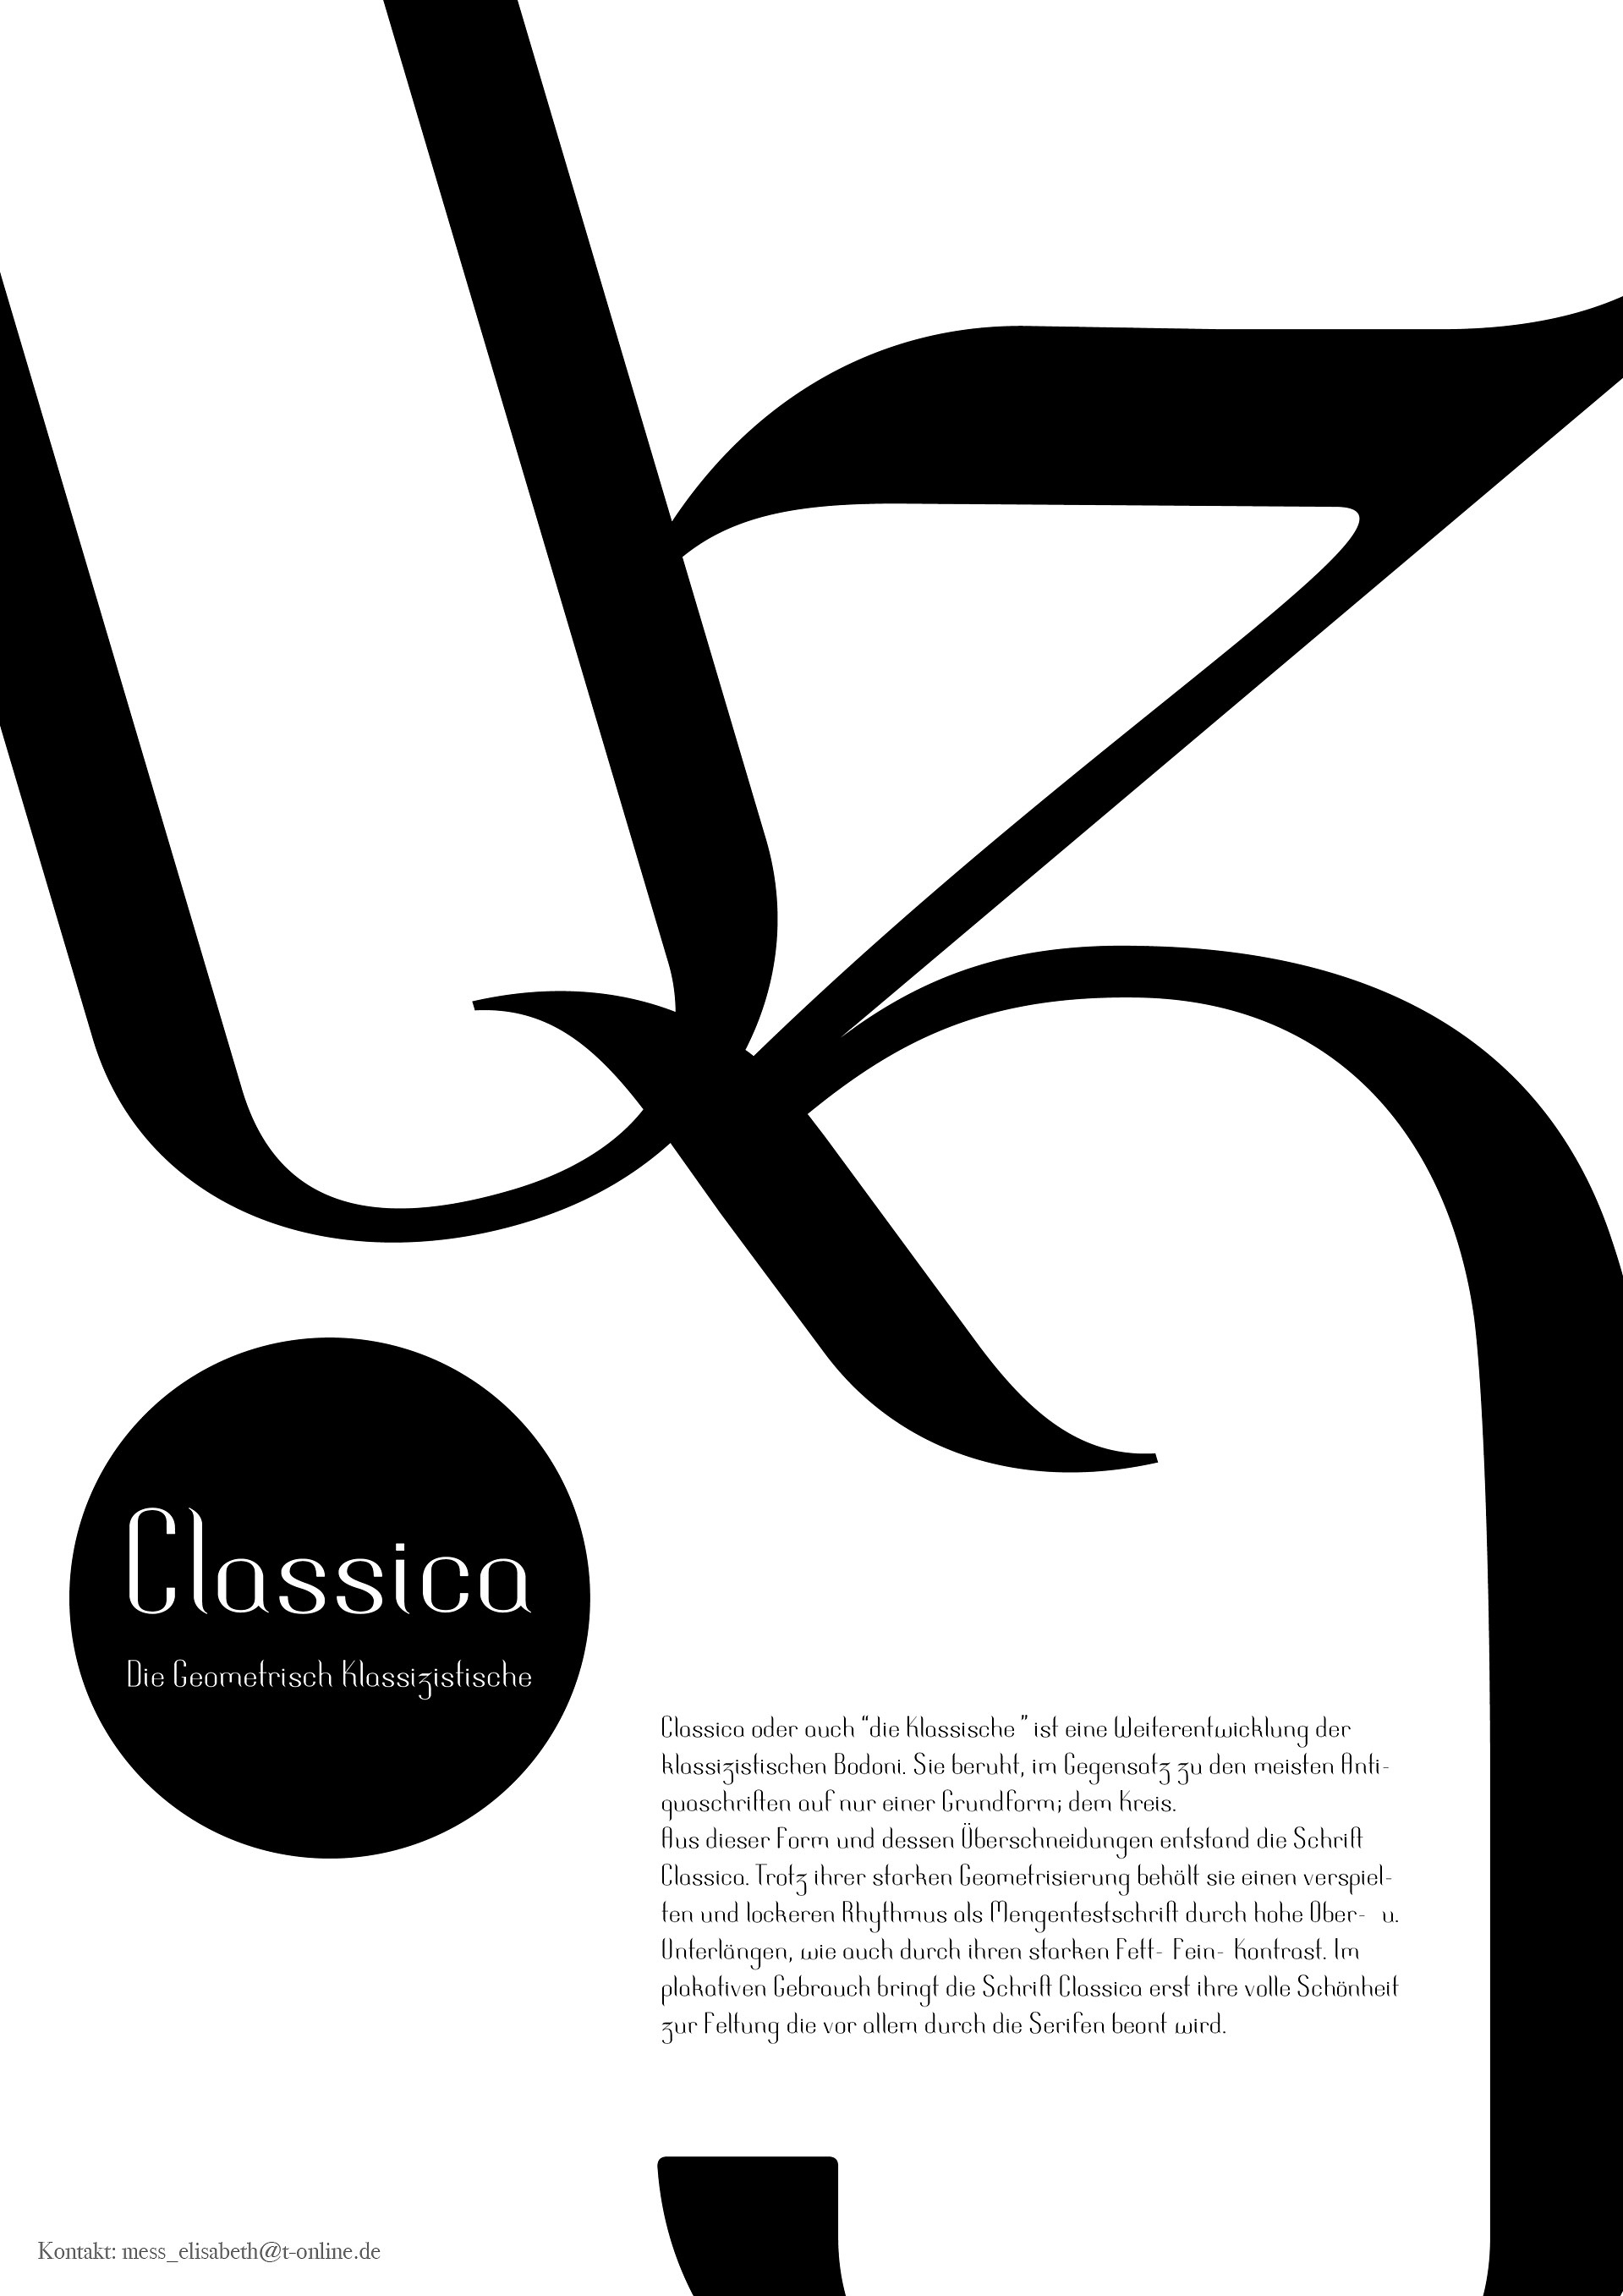 Classica – Schriftentwurf ()